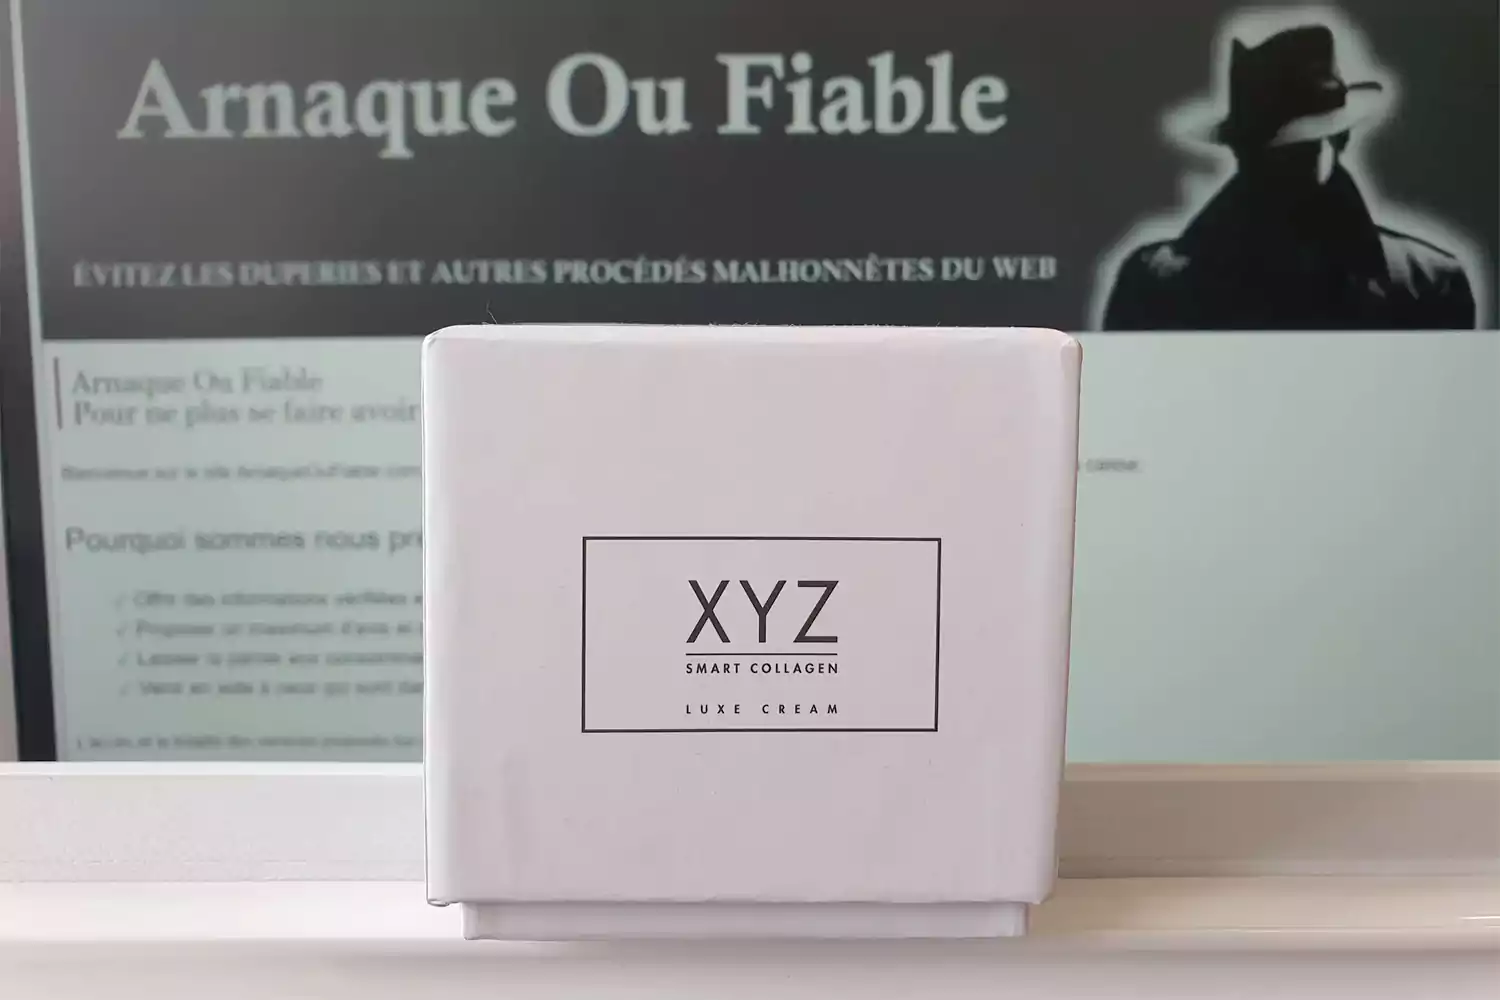 XYZ Smart Collagen Arnaque Ou Fiable